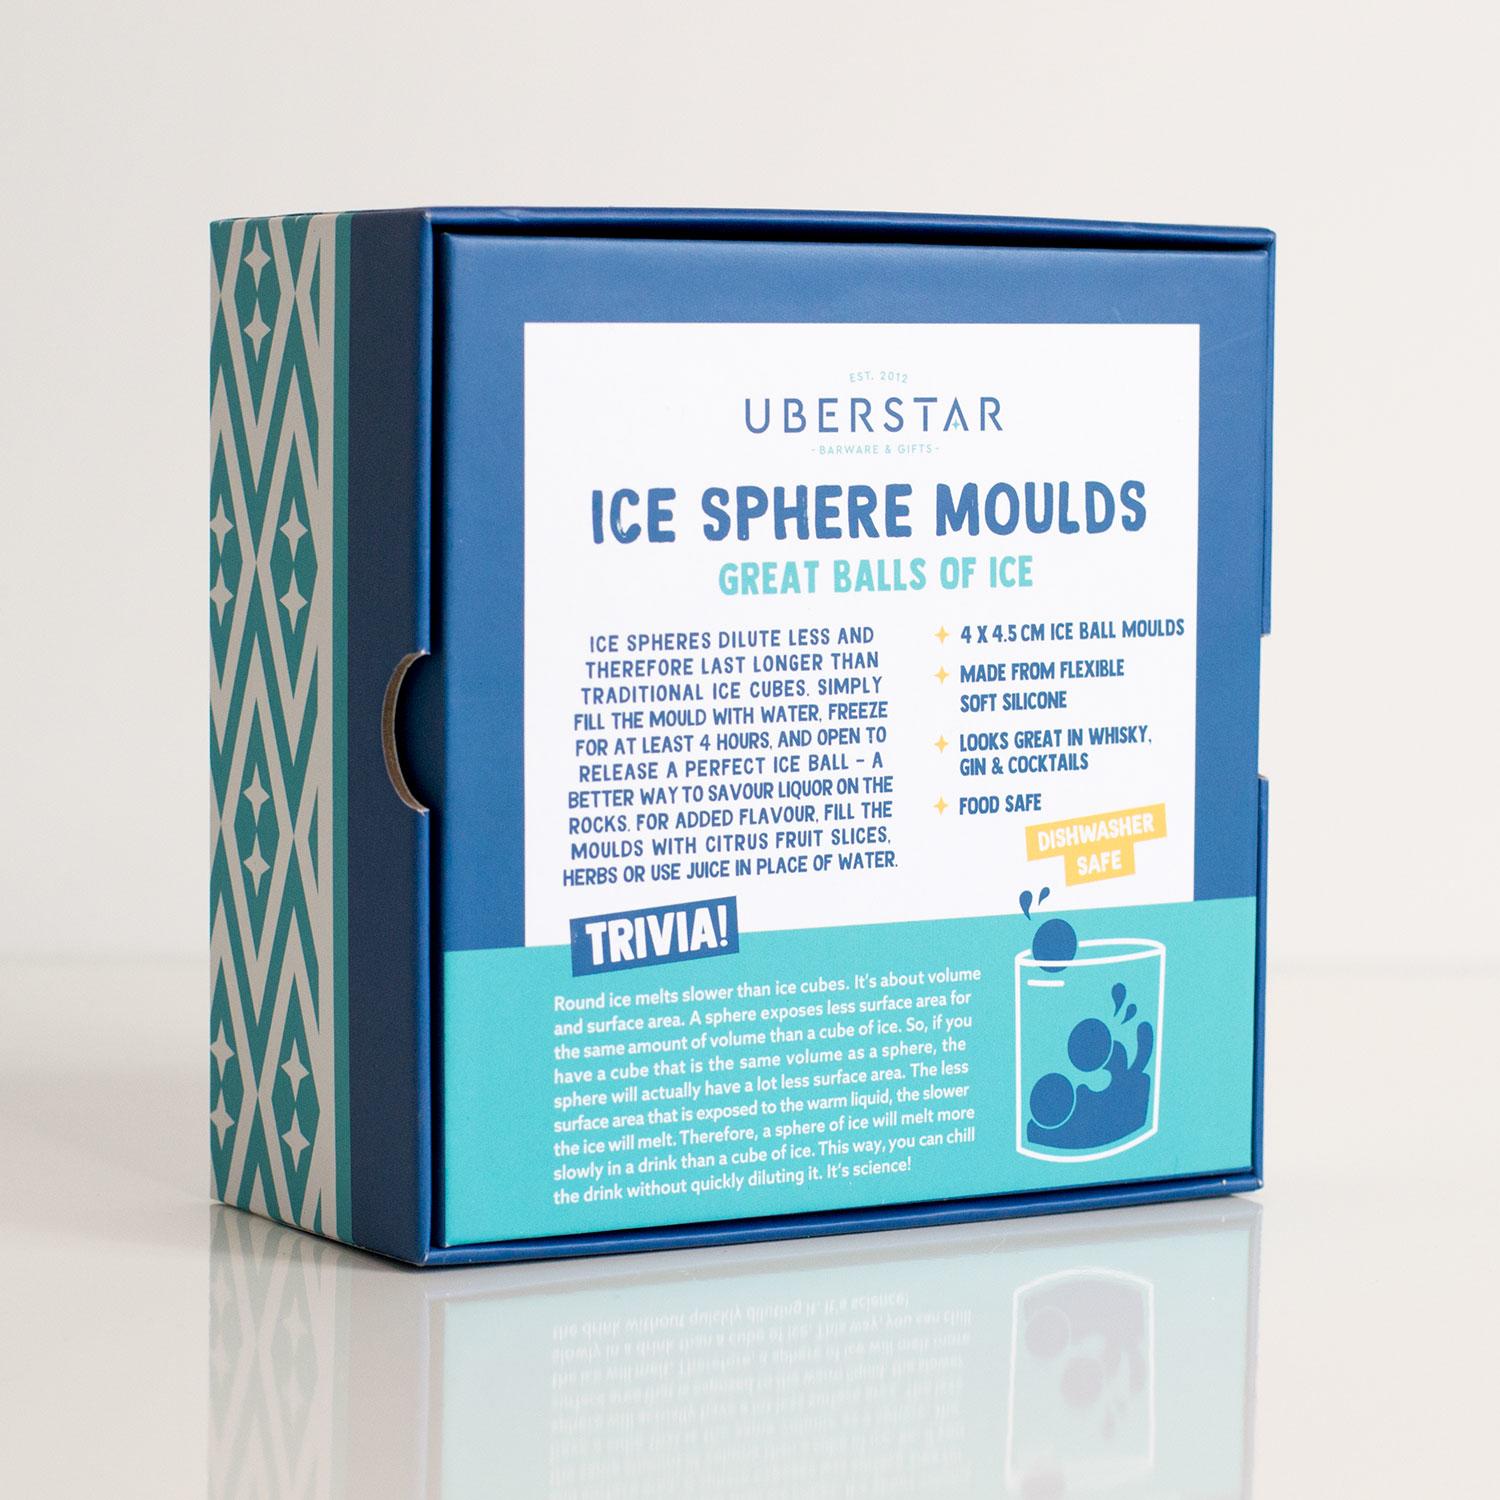 Uberstar Ice Sphere Moulds